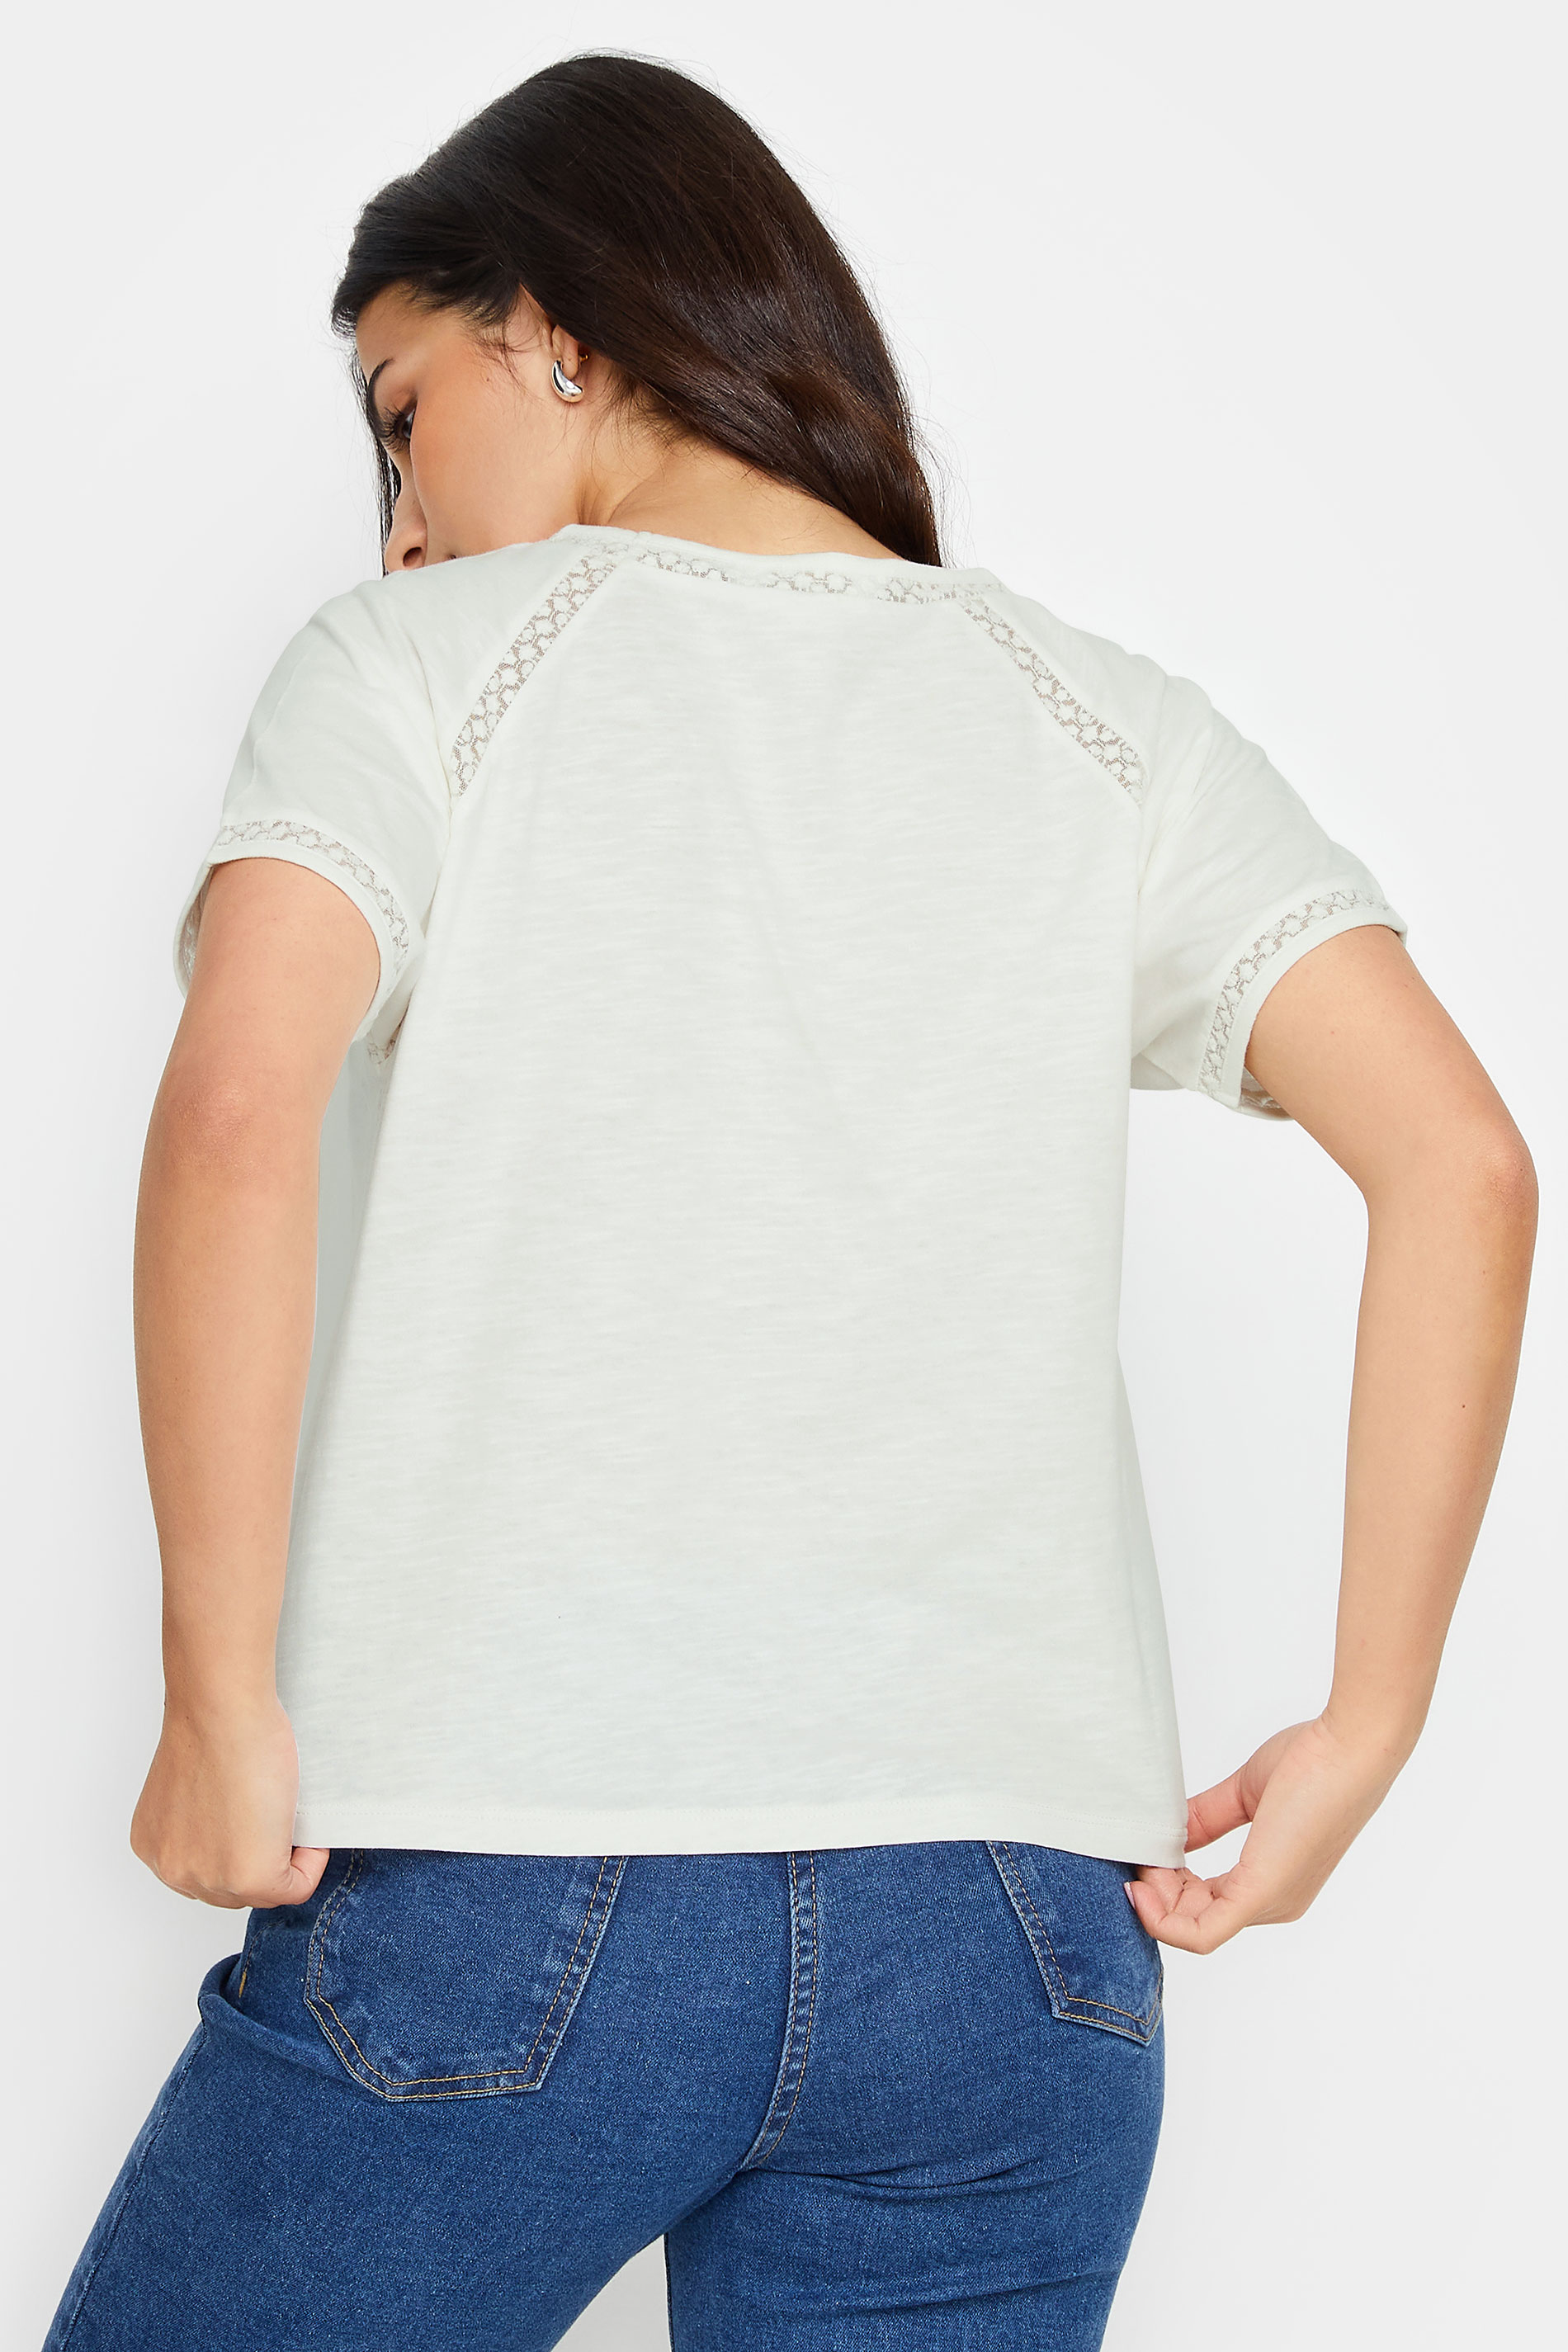 PixieGirl Petite Women's Ivory White Crochet Detail T-Shirt | PixieGirl 3